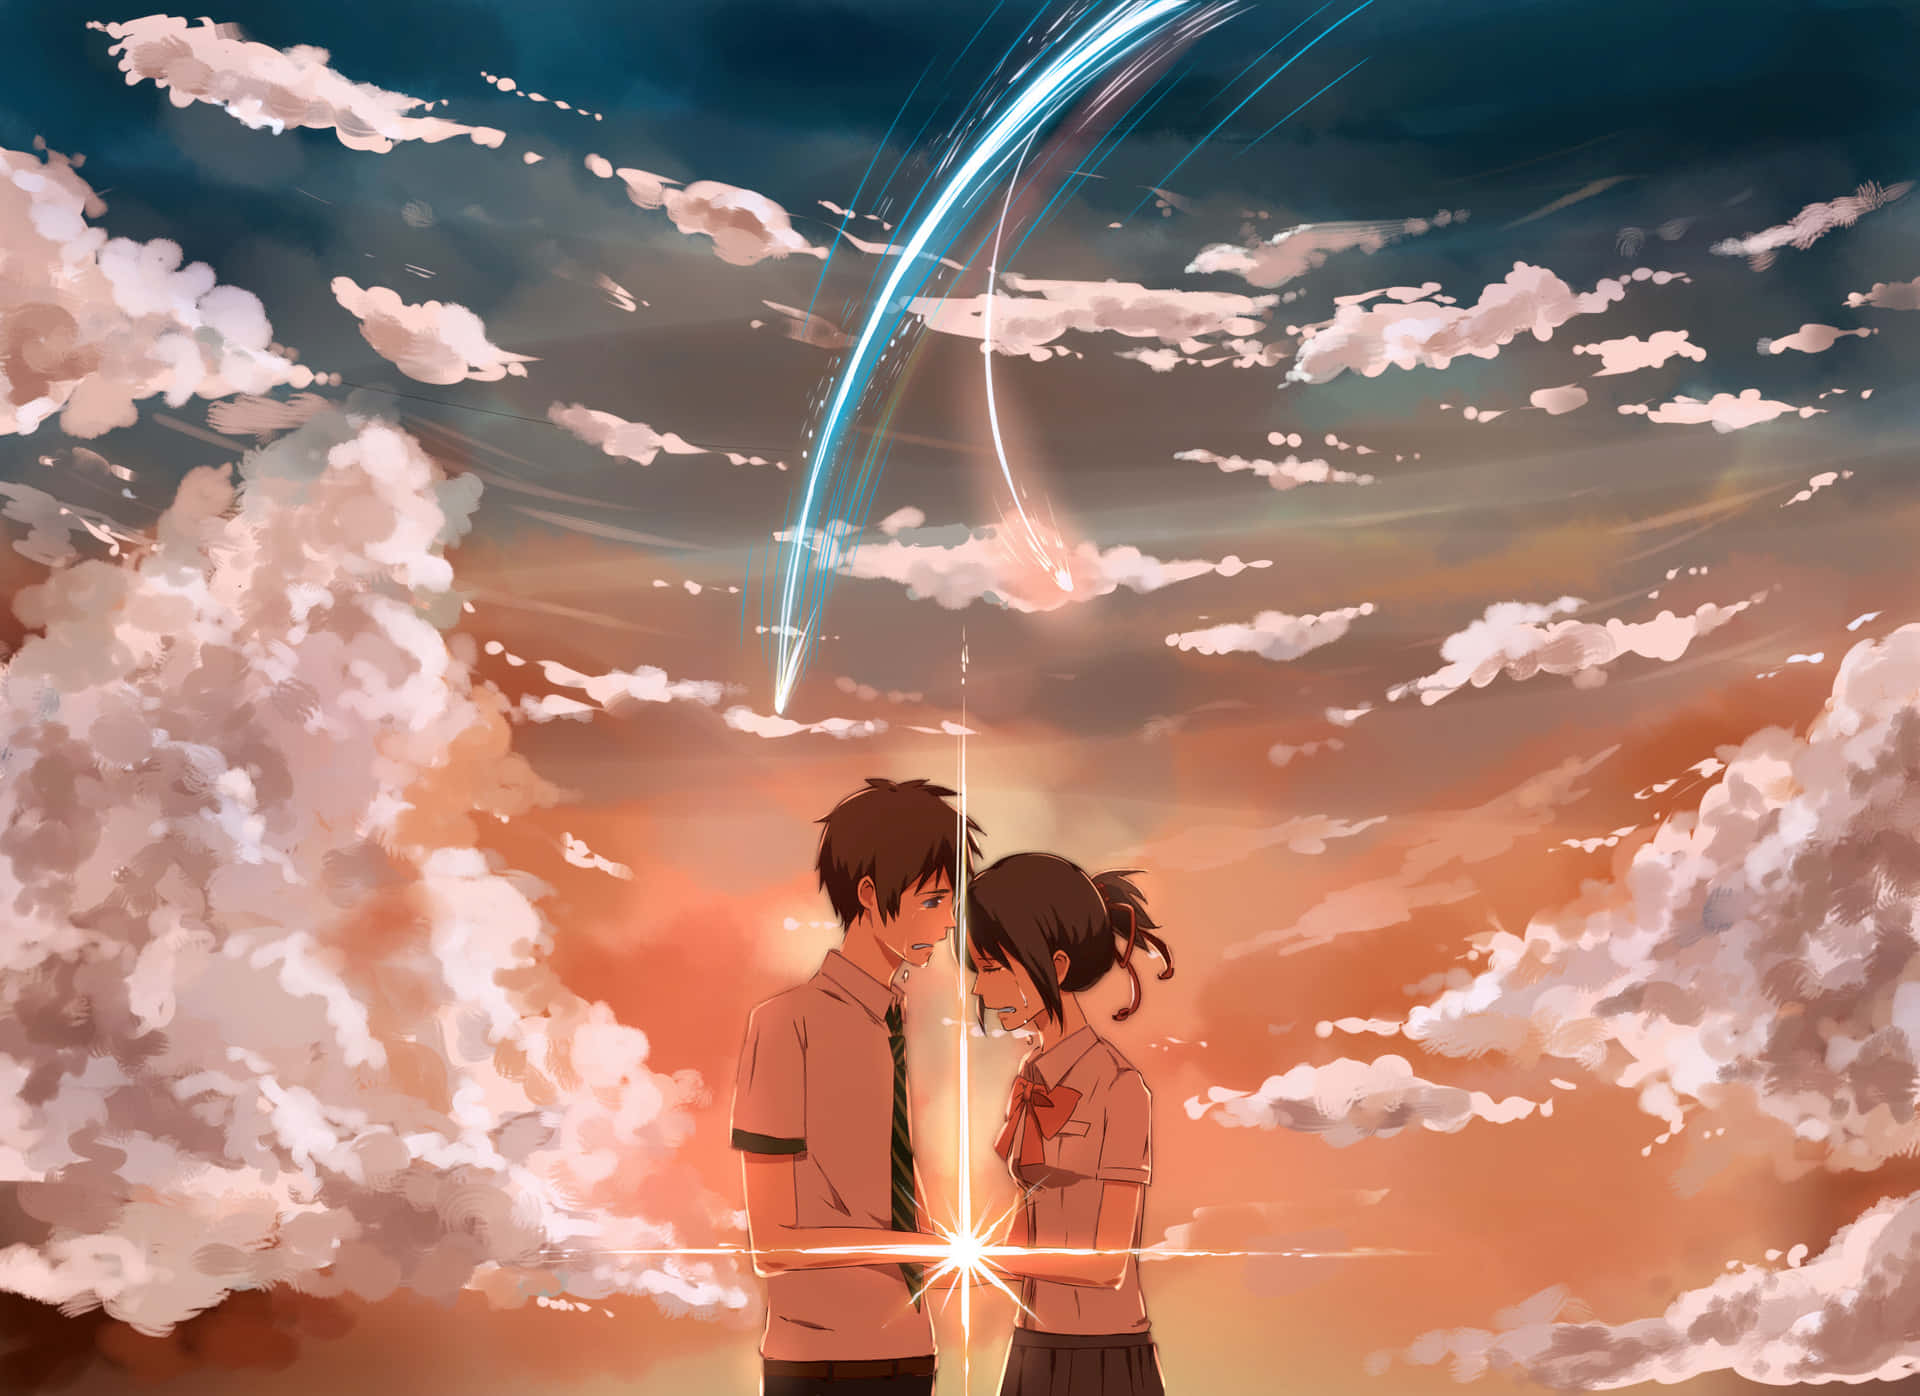 Mitsuha Miyamizu gazing across the night sky in 'Kimi No Na Wa'